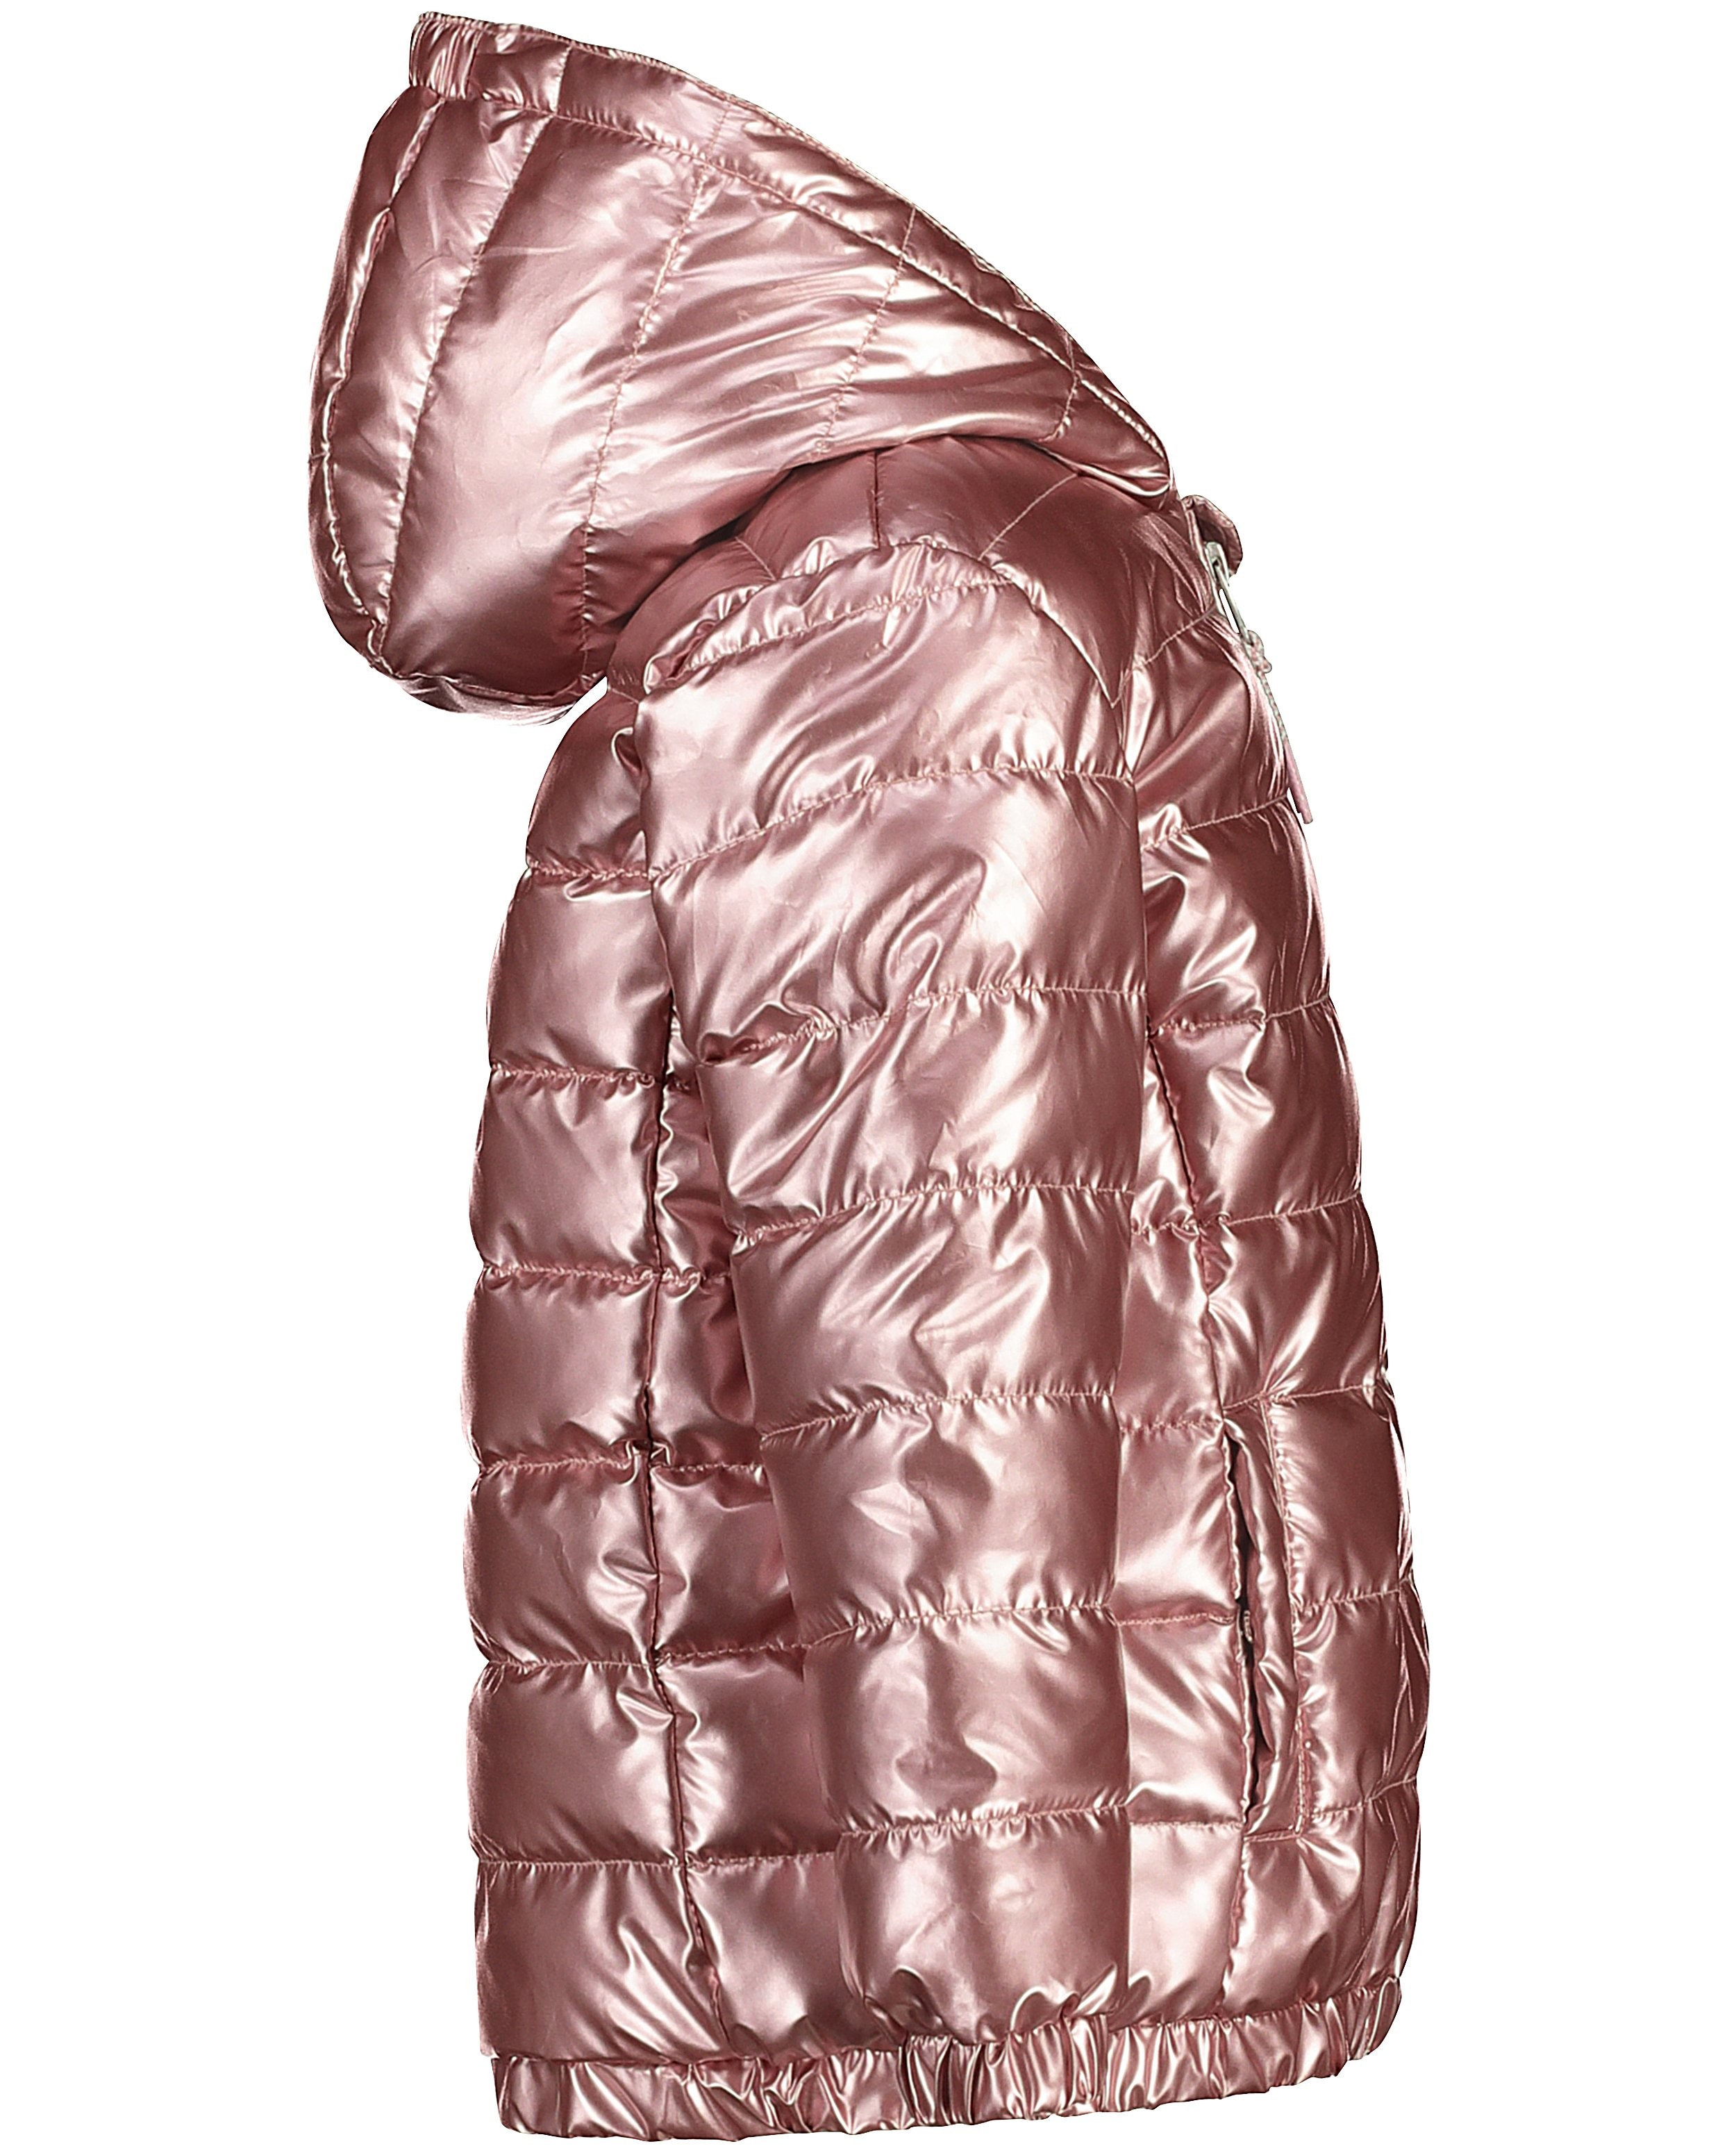 Zomerjassen - Waterafstotende roze jas